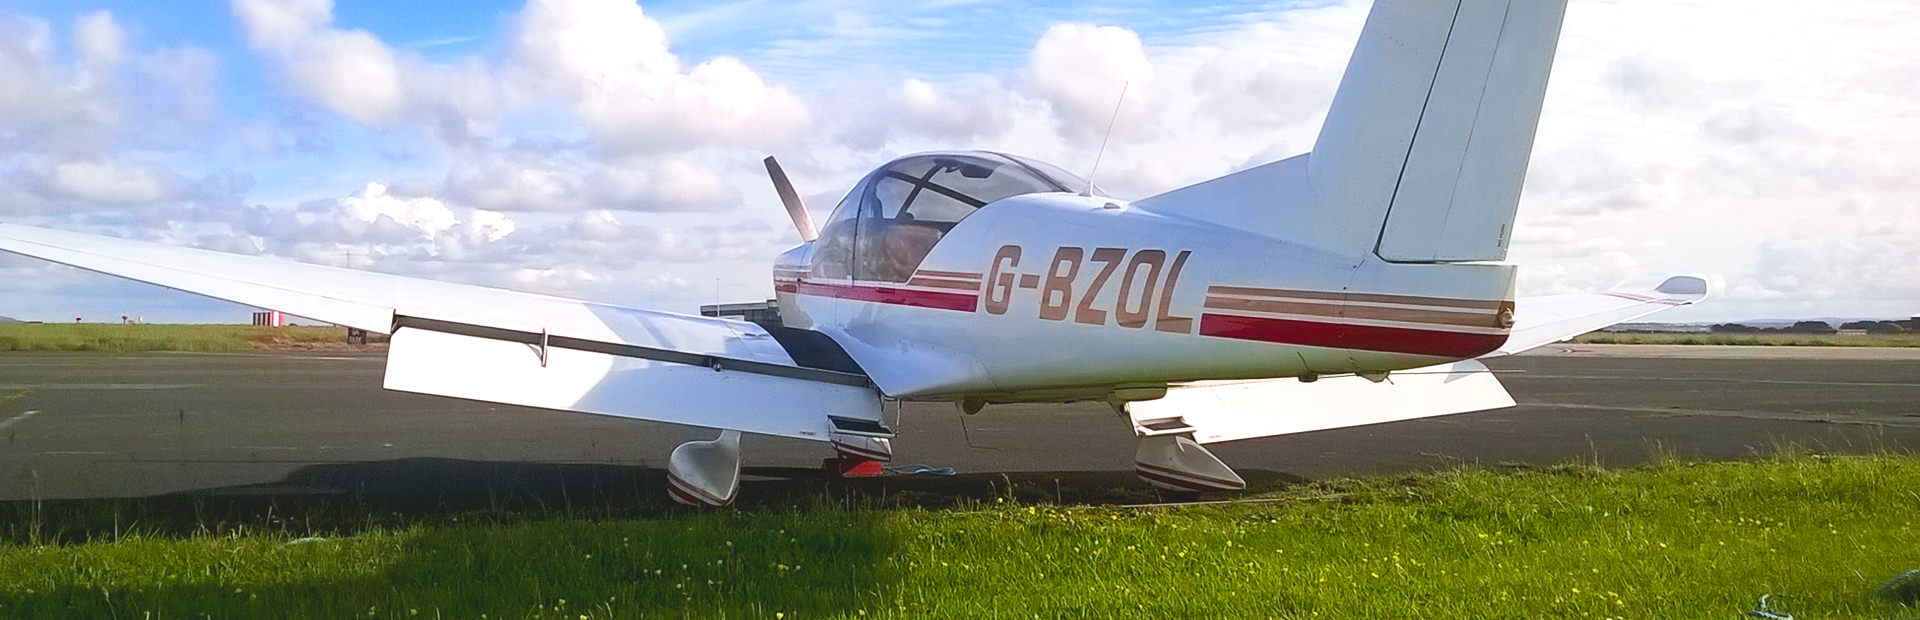 G-BZOL, Robin R3000 at Flynqy Pilot Training